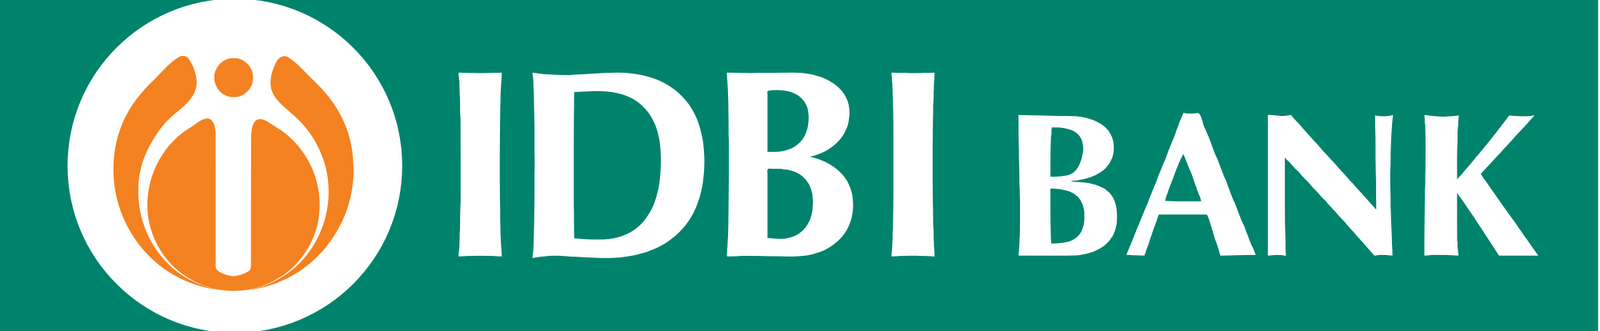 All Bank Logo - Nationalised Banks Logos and Founder Name